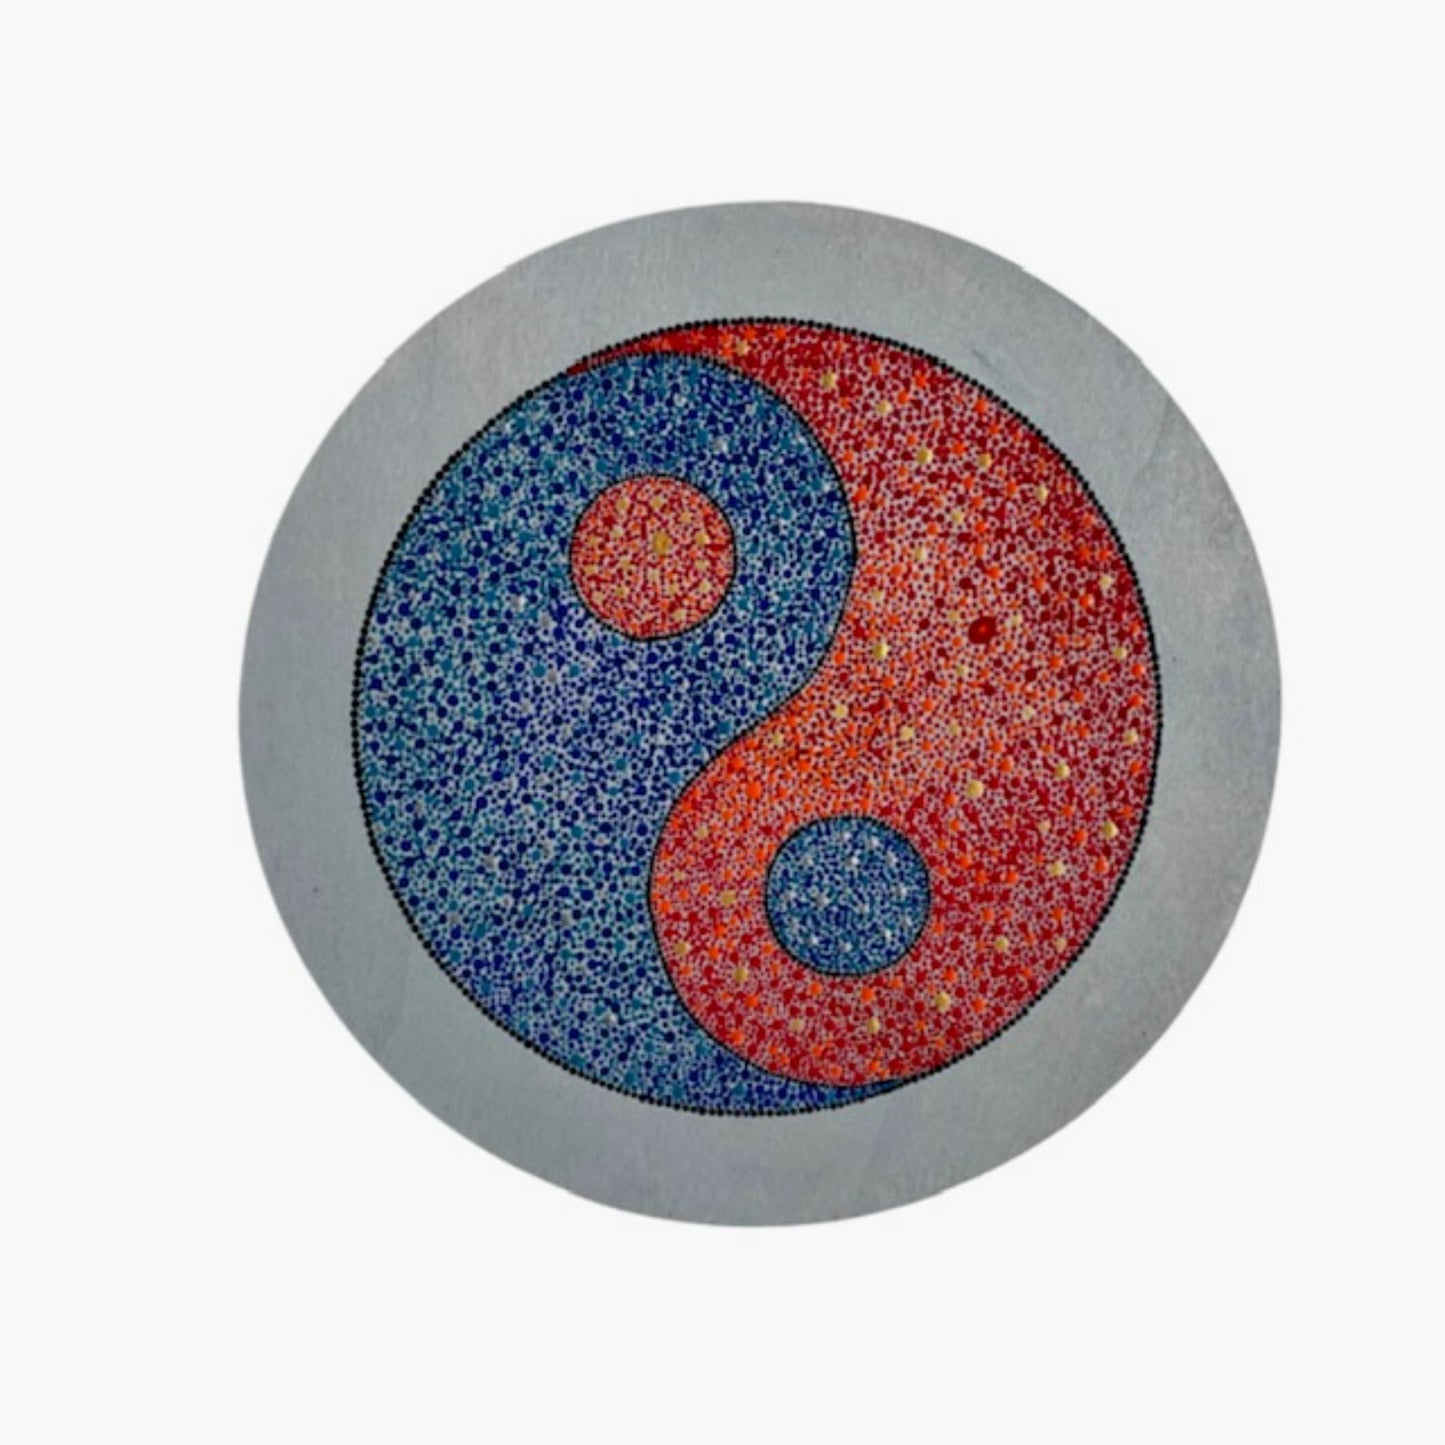 Yin Yang Water and Fire Dot Art Acrylic Paint Handmade